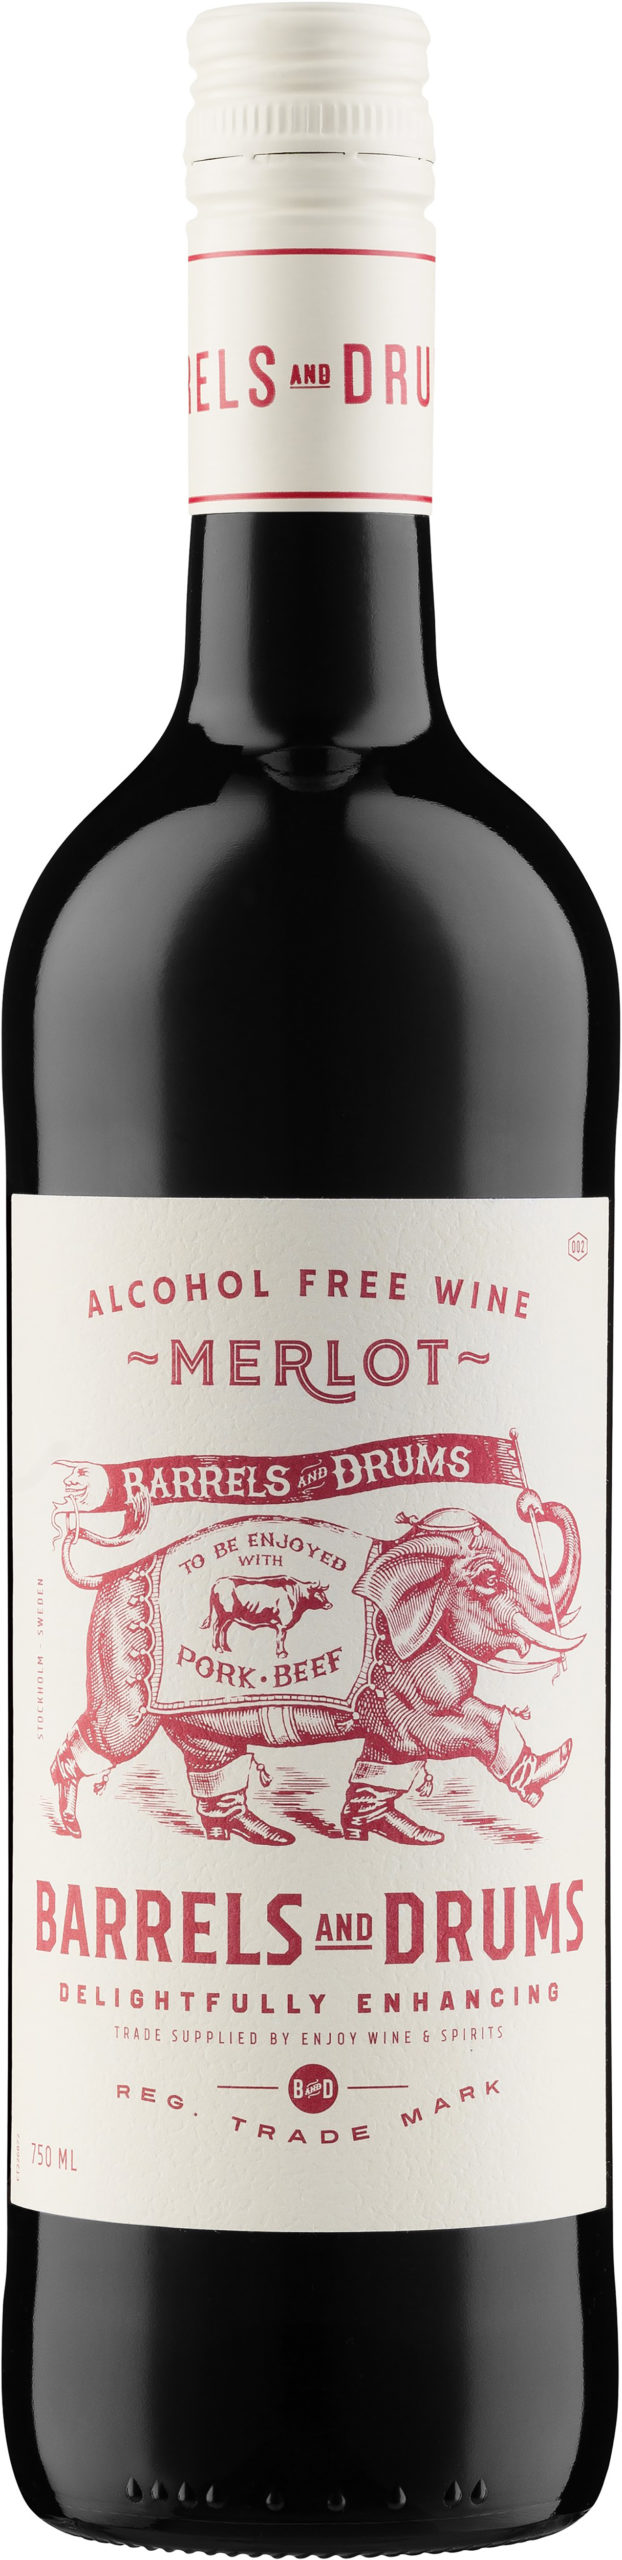 Enjoy Wine & Spirits Barrels, Drums Merlot Alcohol Free